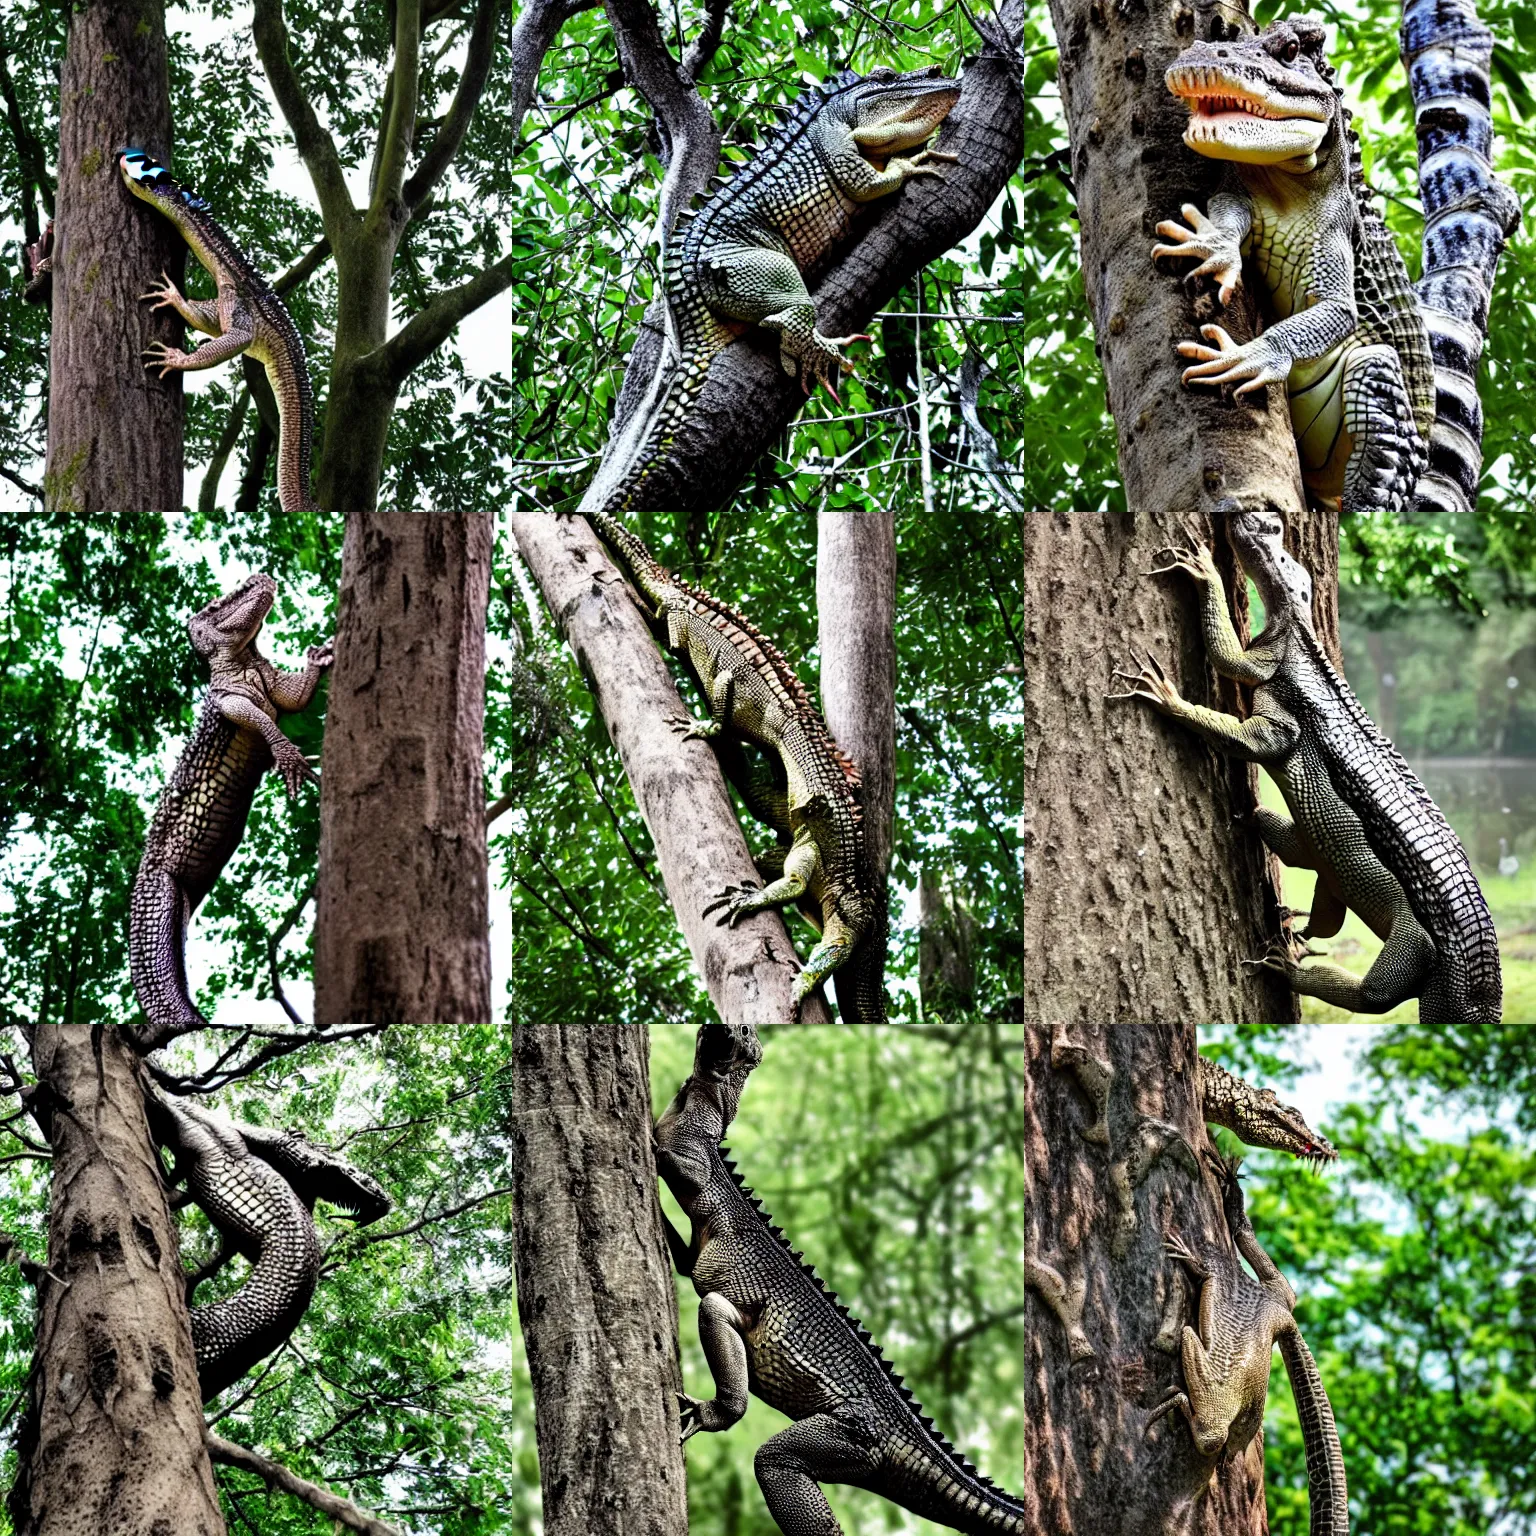 Prompt: crocodile climbing the tree